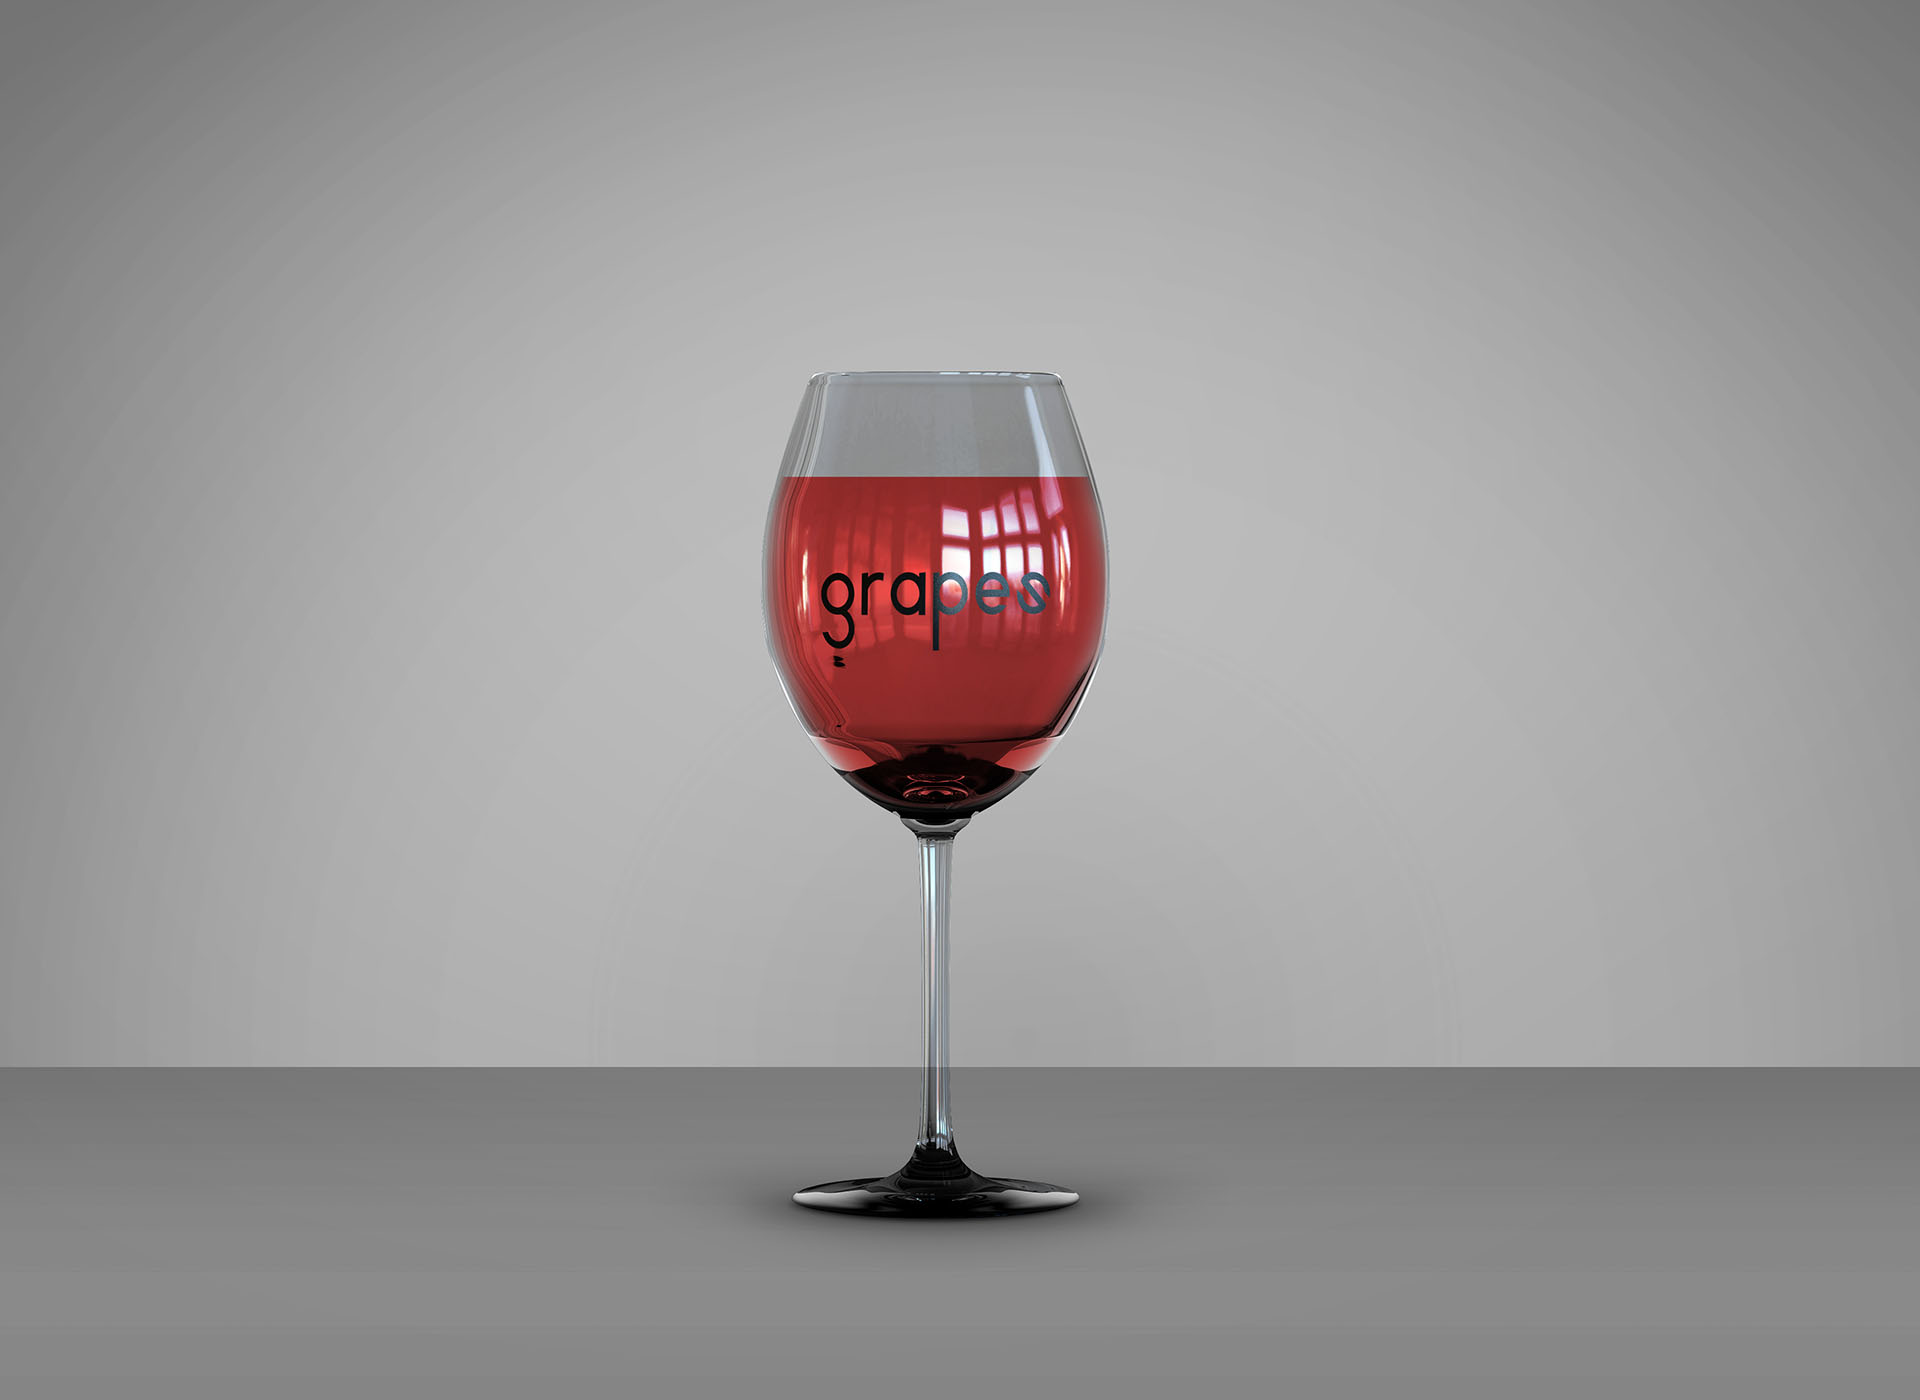 Grapes wine bar portfolio inoveo glass